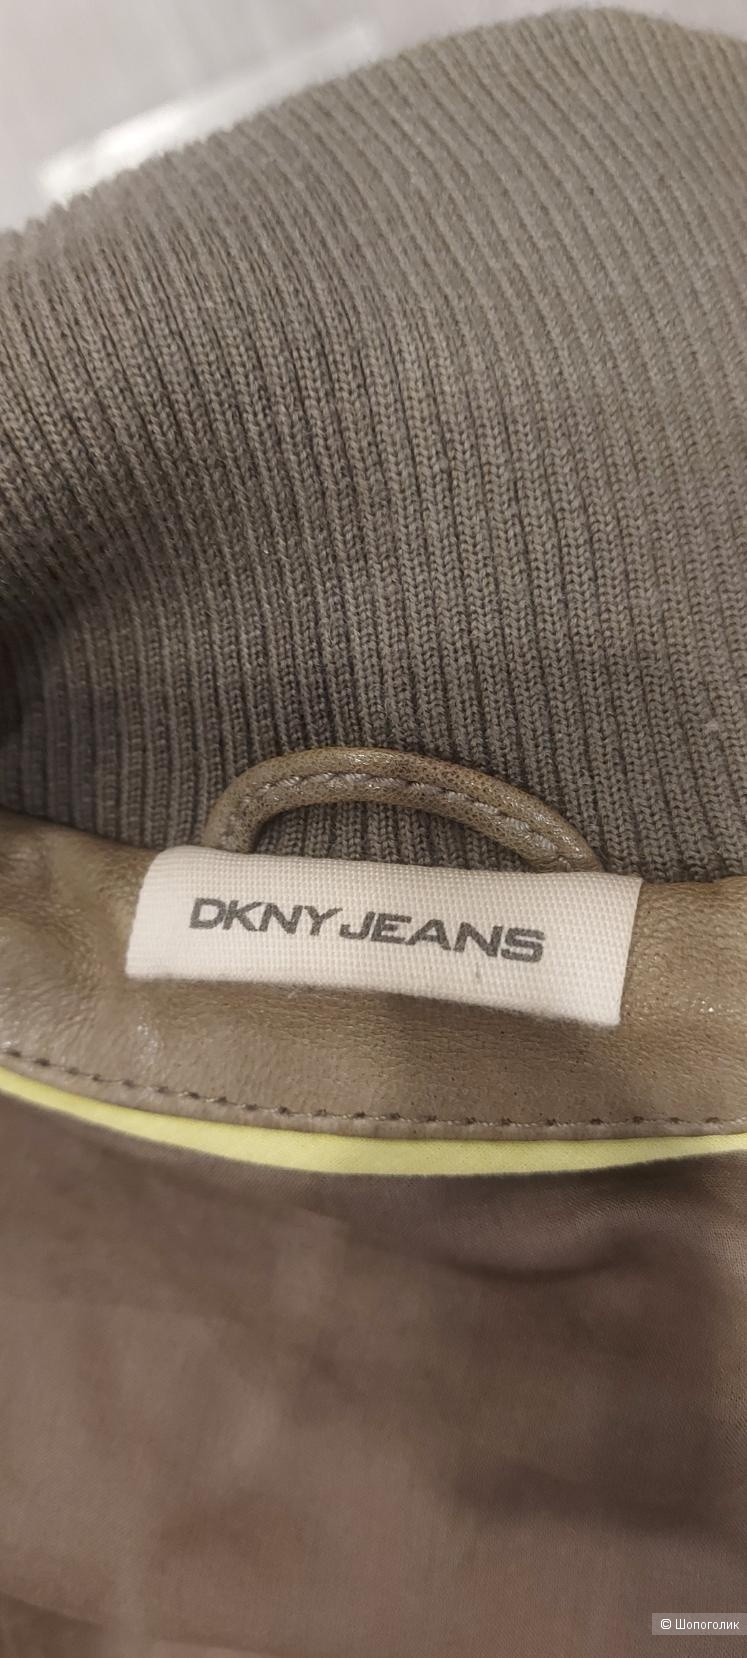 Кожаная куртка DKNY jeans на 42-44 р-р